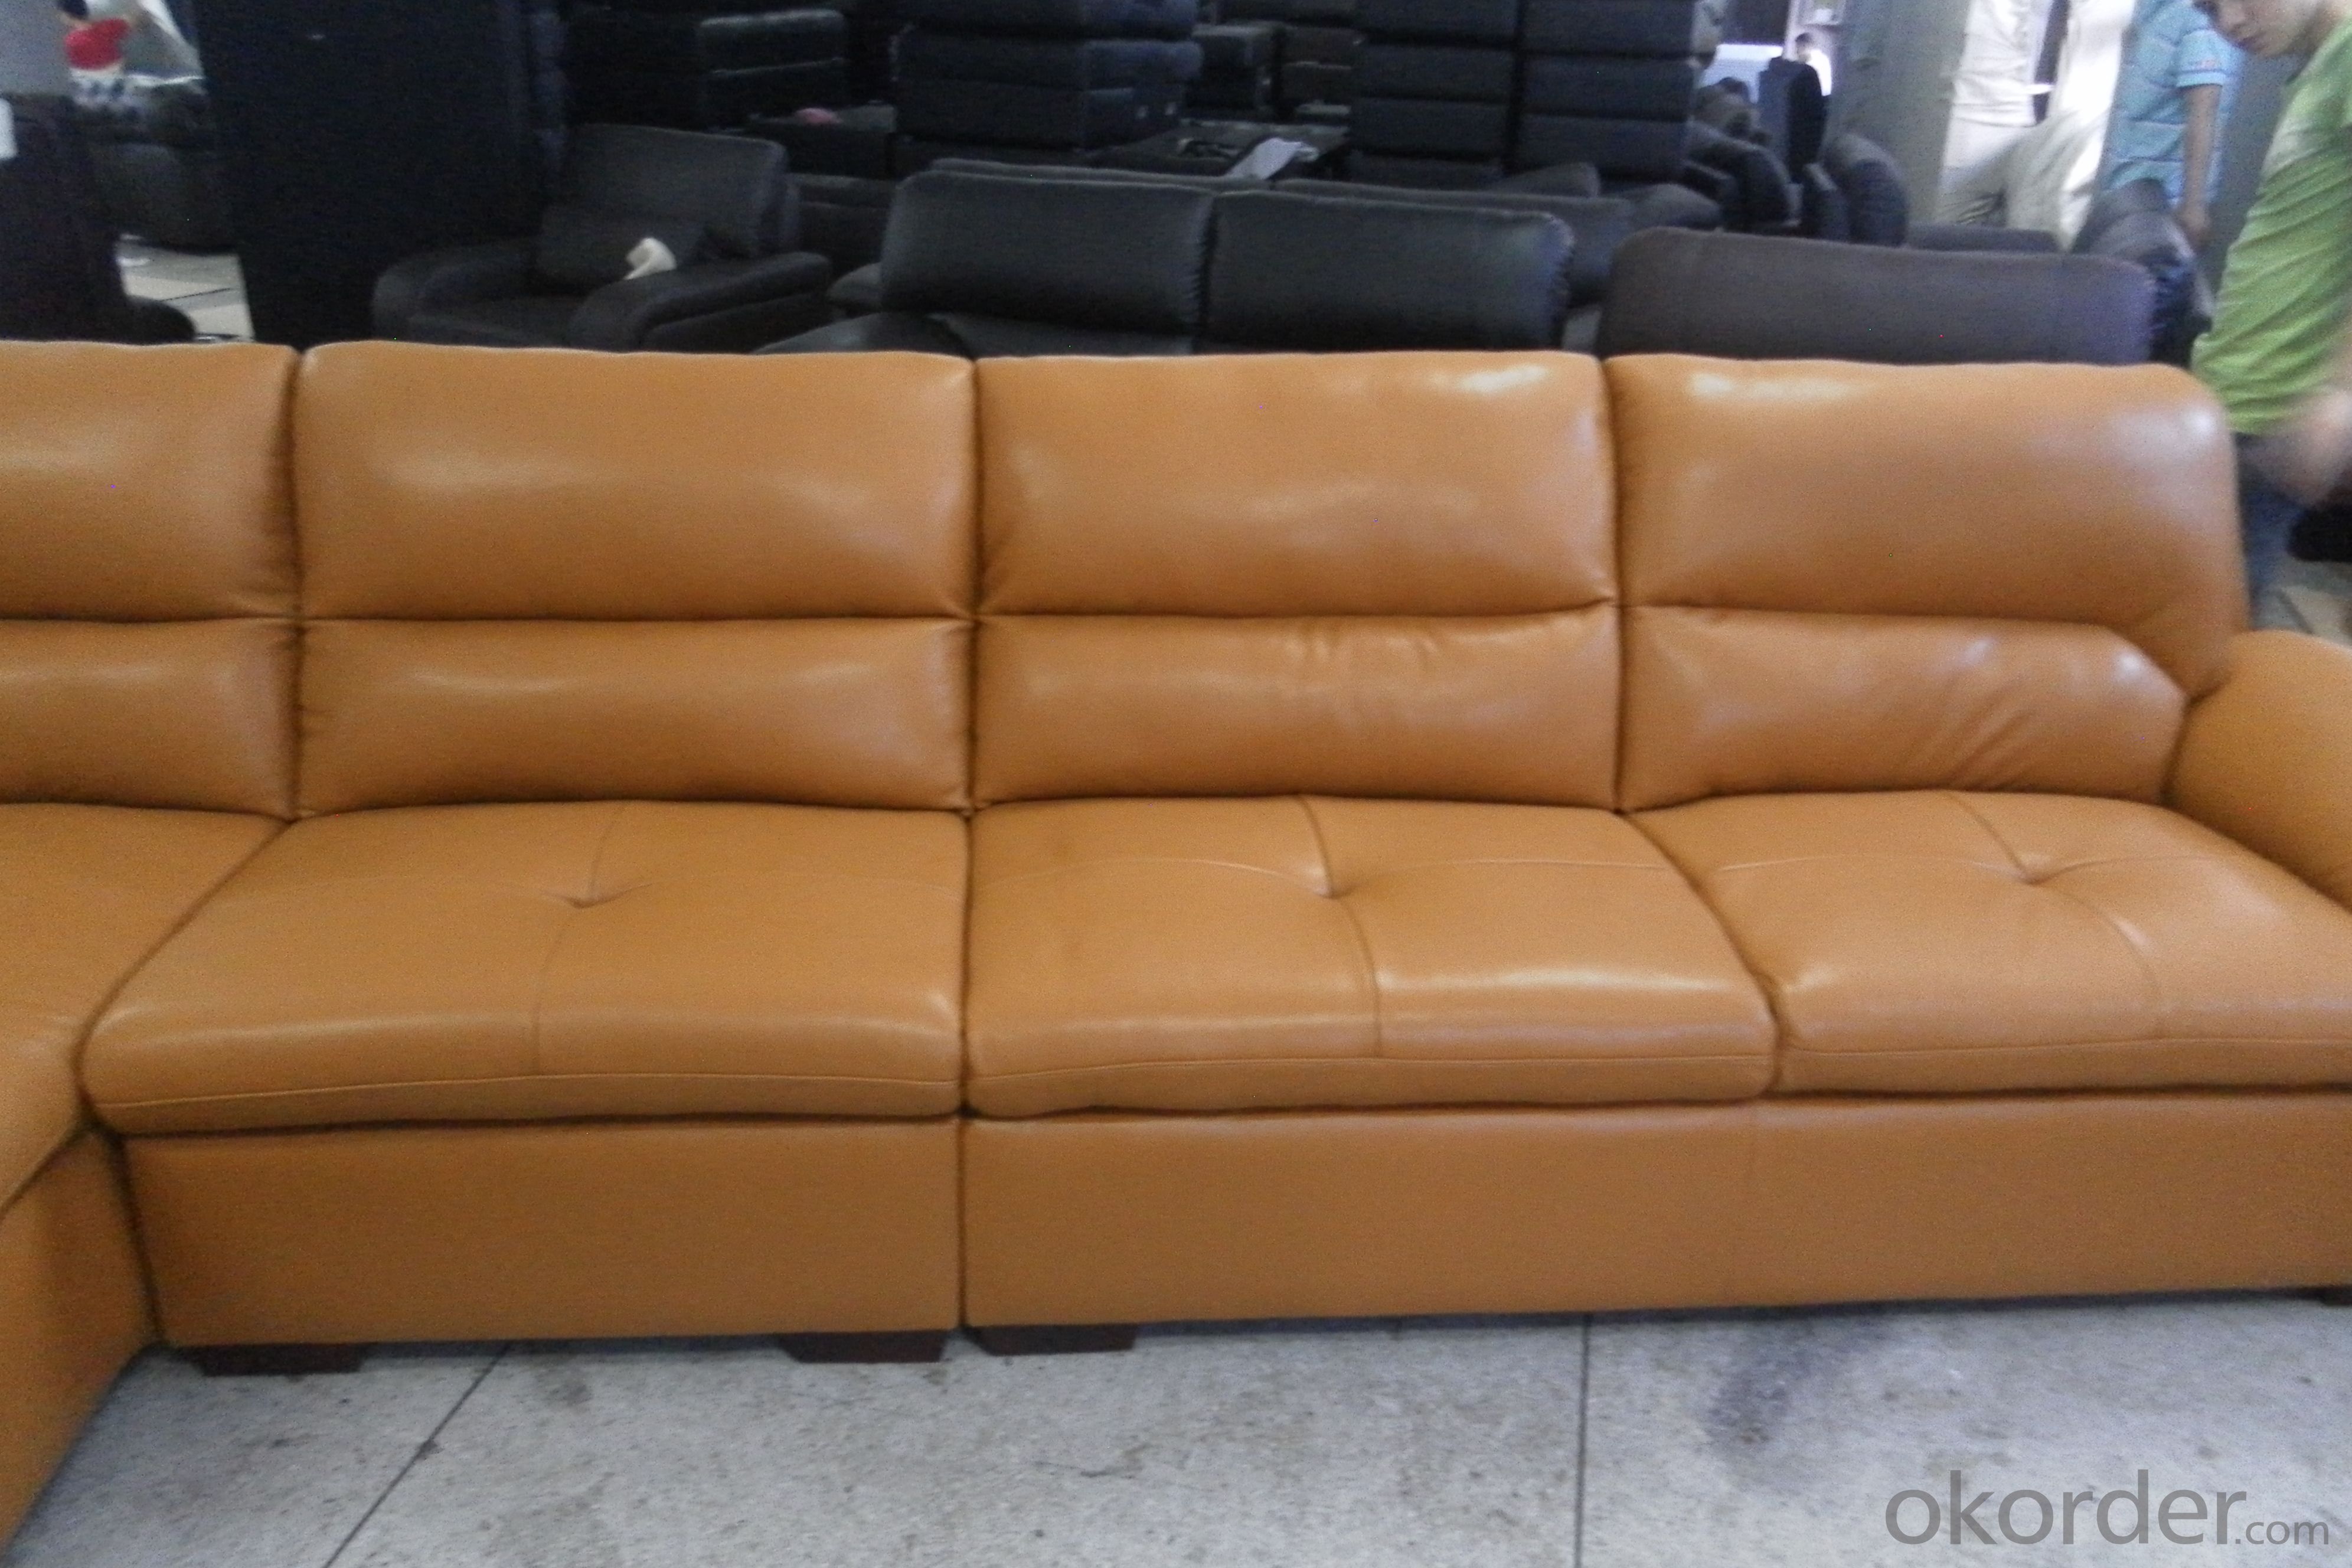 leather  corner sofa manafacturer  6913